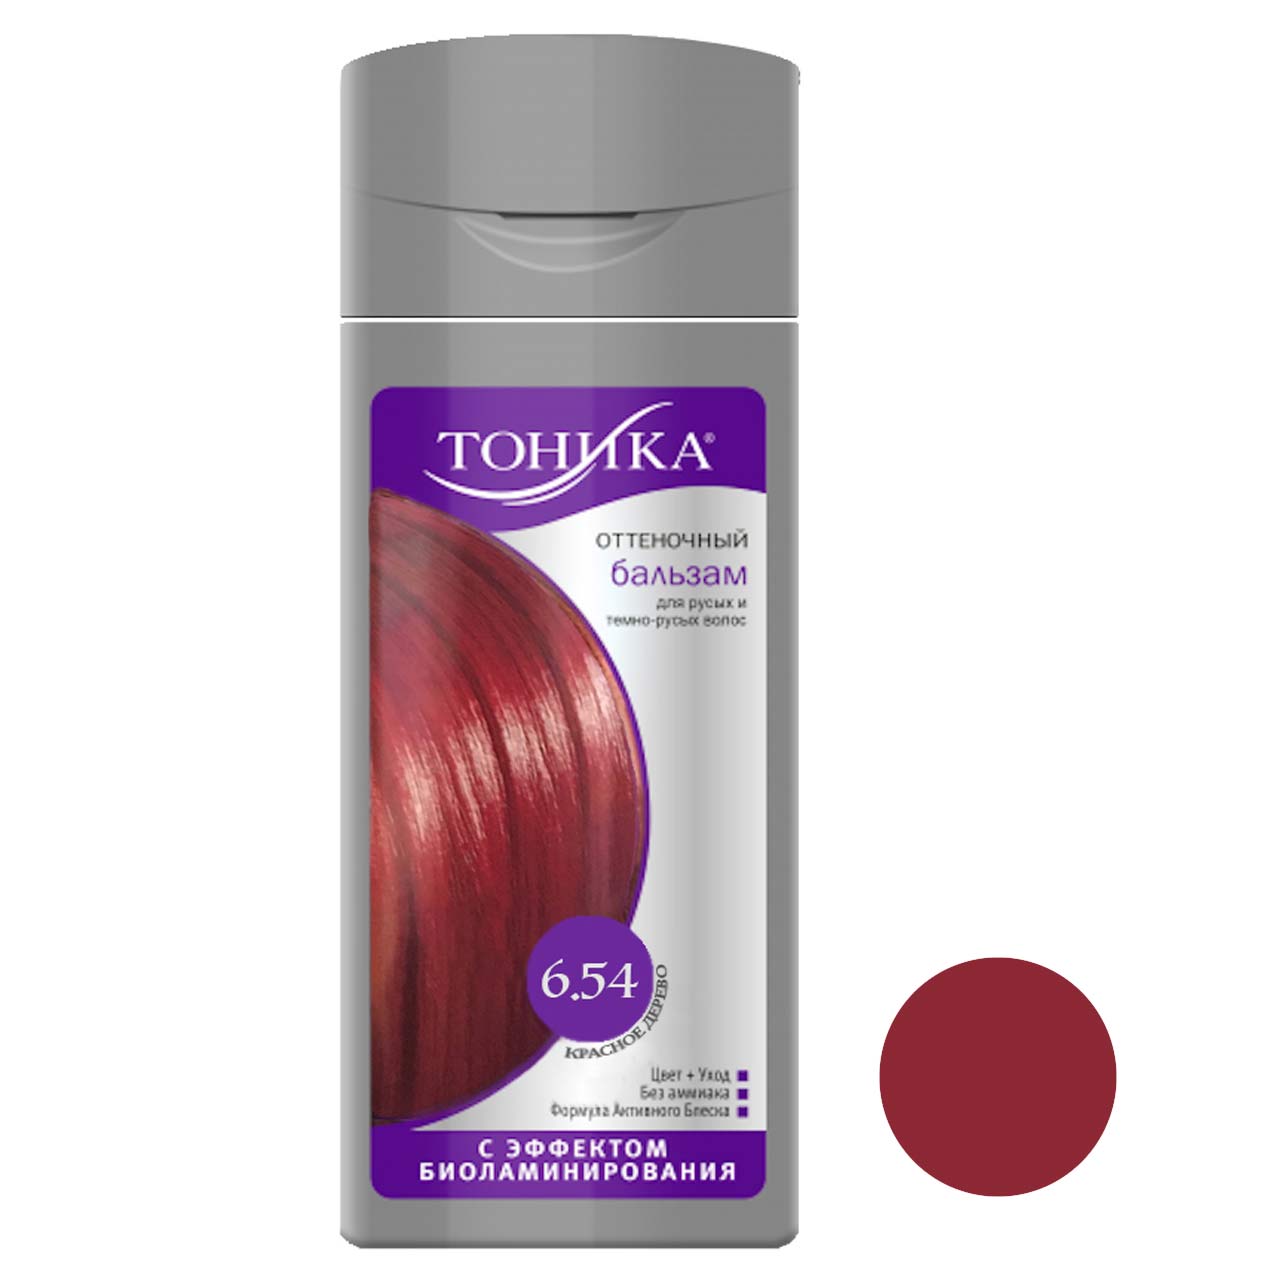 شامپو رنگ مو تونیکا شماره 3.54 حجم 150 میلی لیتر رنگ قرمز